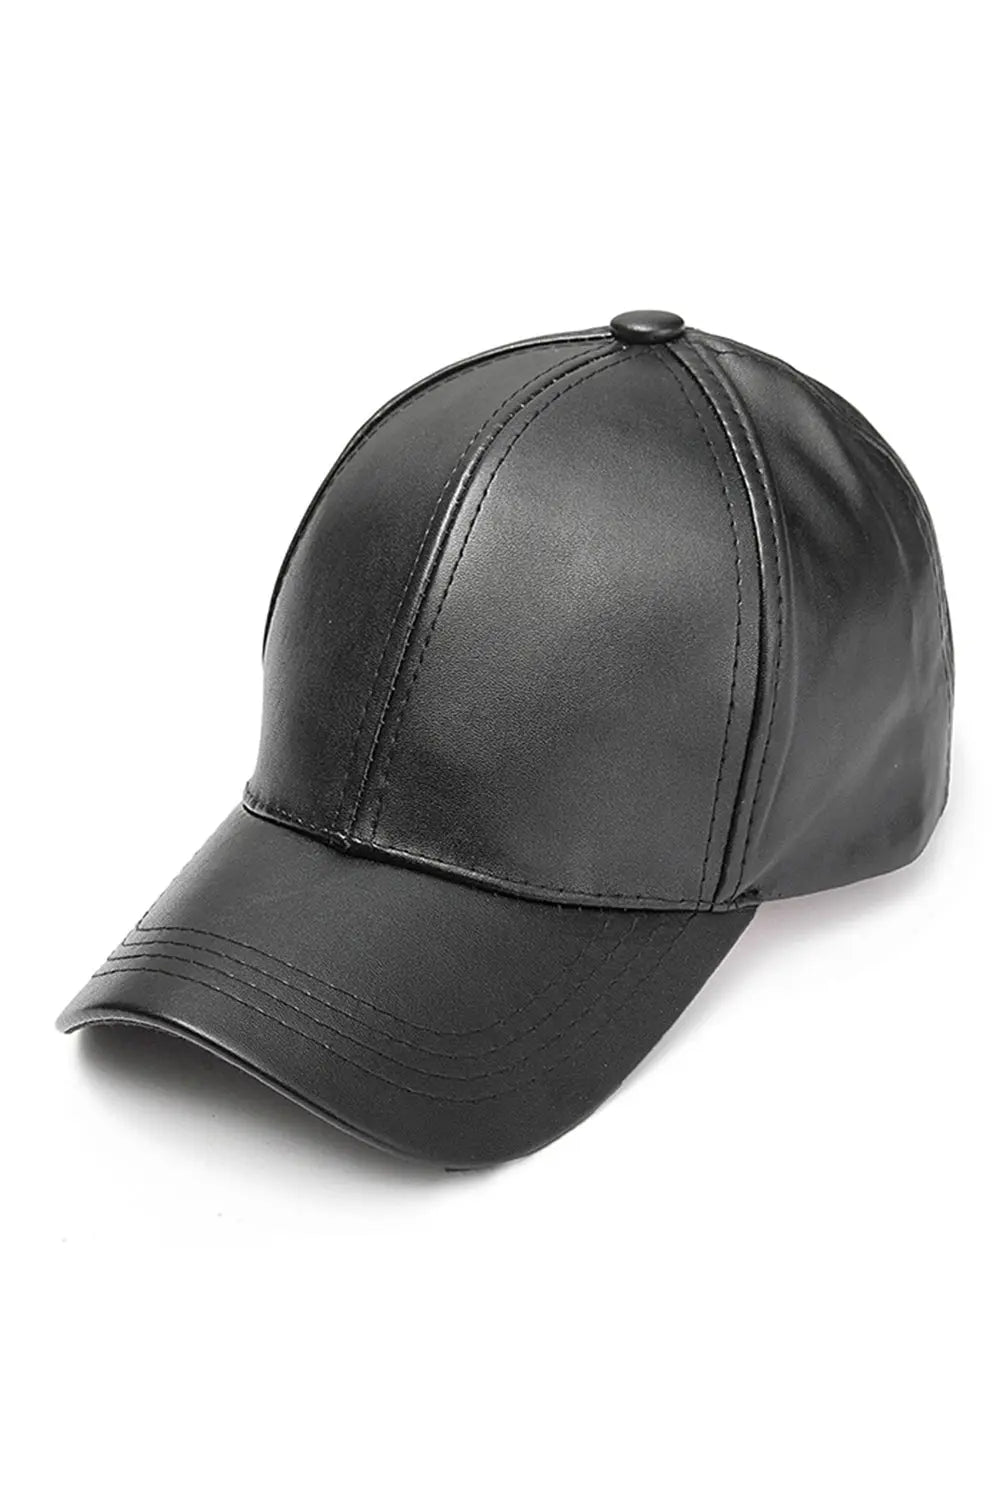 Leather Baseball Cap - Black - Strange-Clothes